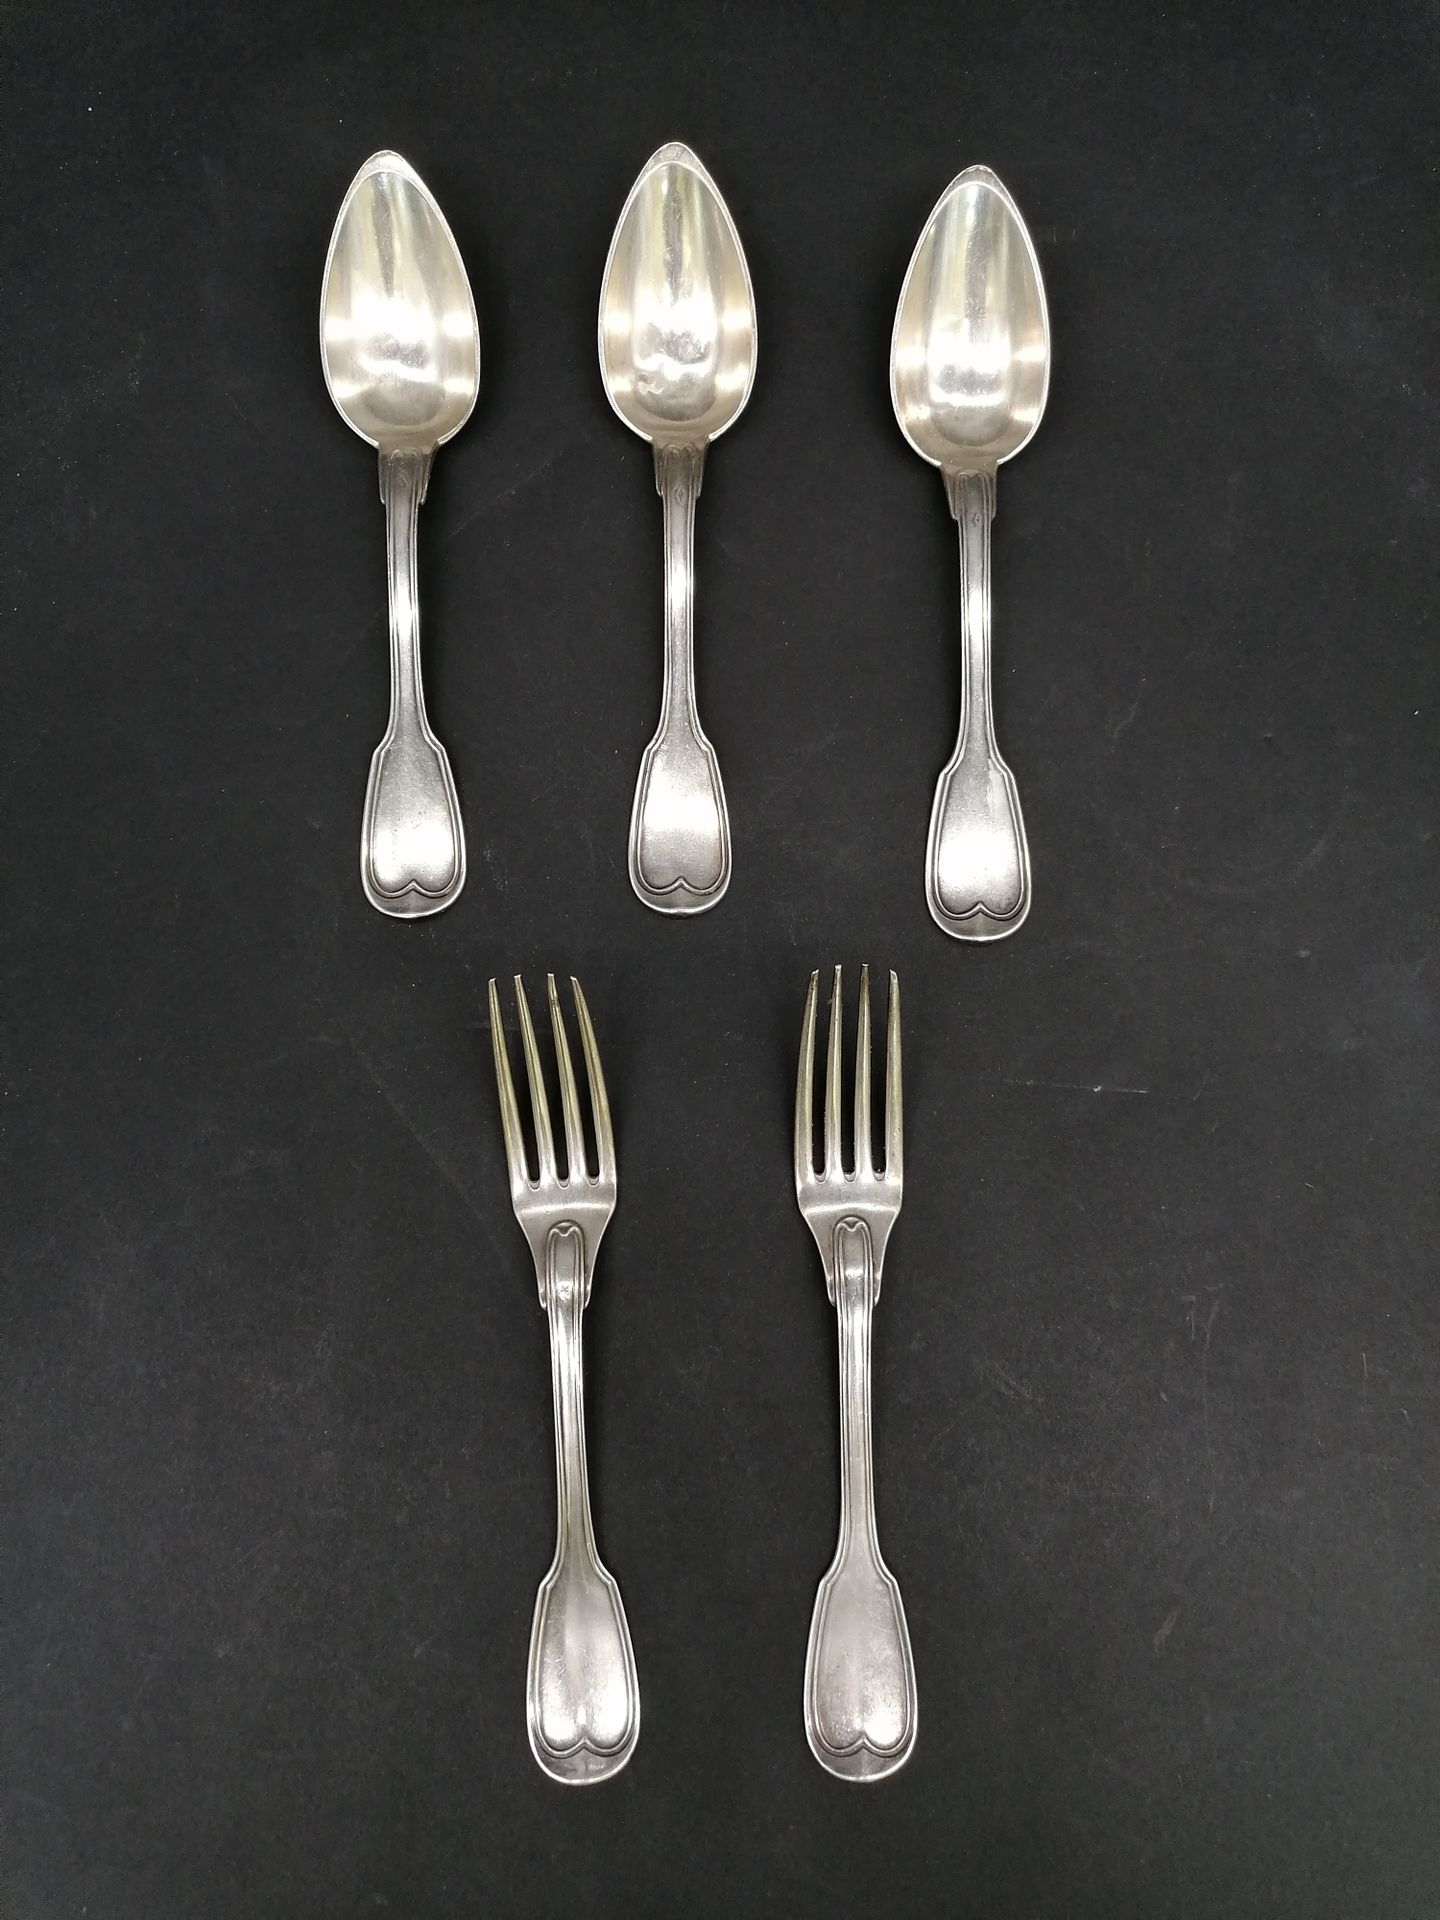 Null 一套银色圆珠笔

三把汤匙和两把餐叉

带网的模型。

Minerve的标志

PN : 400g